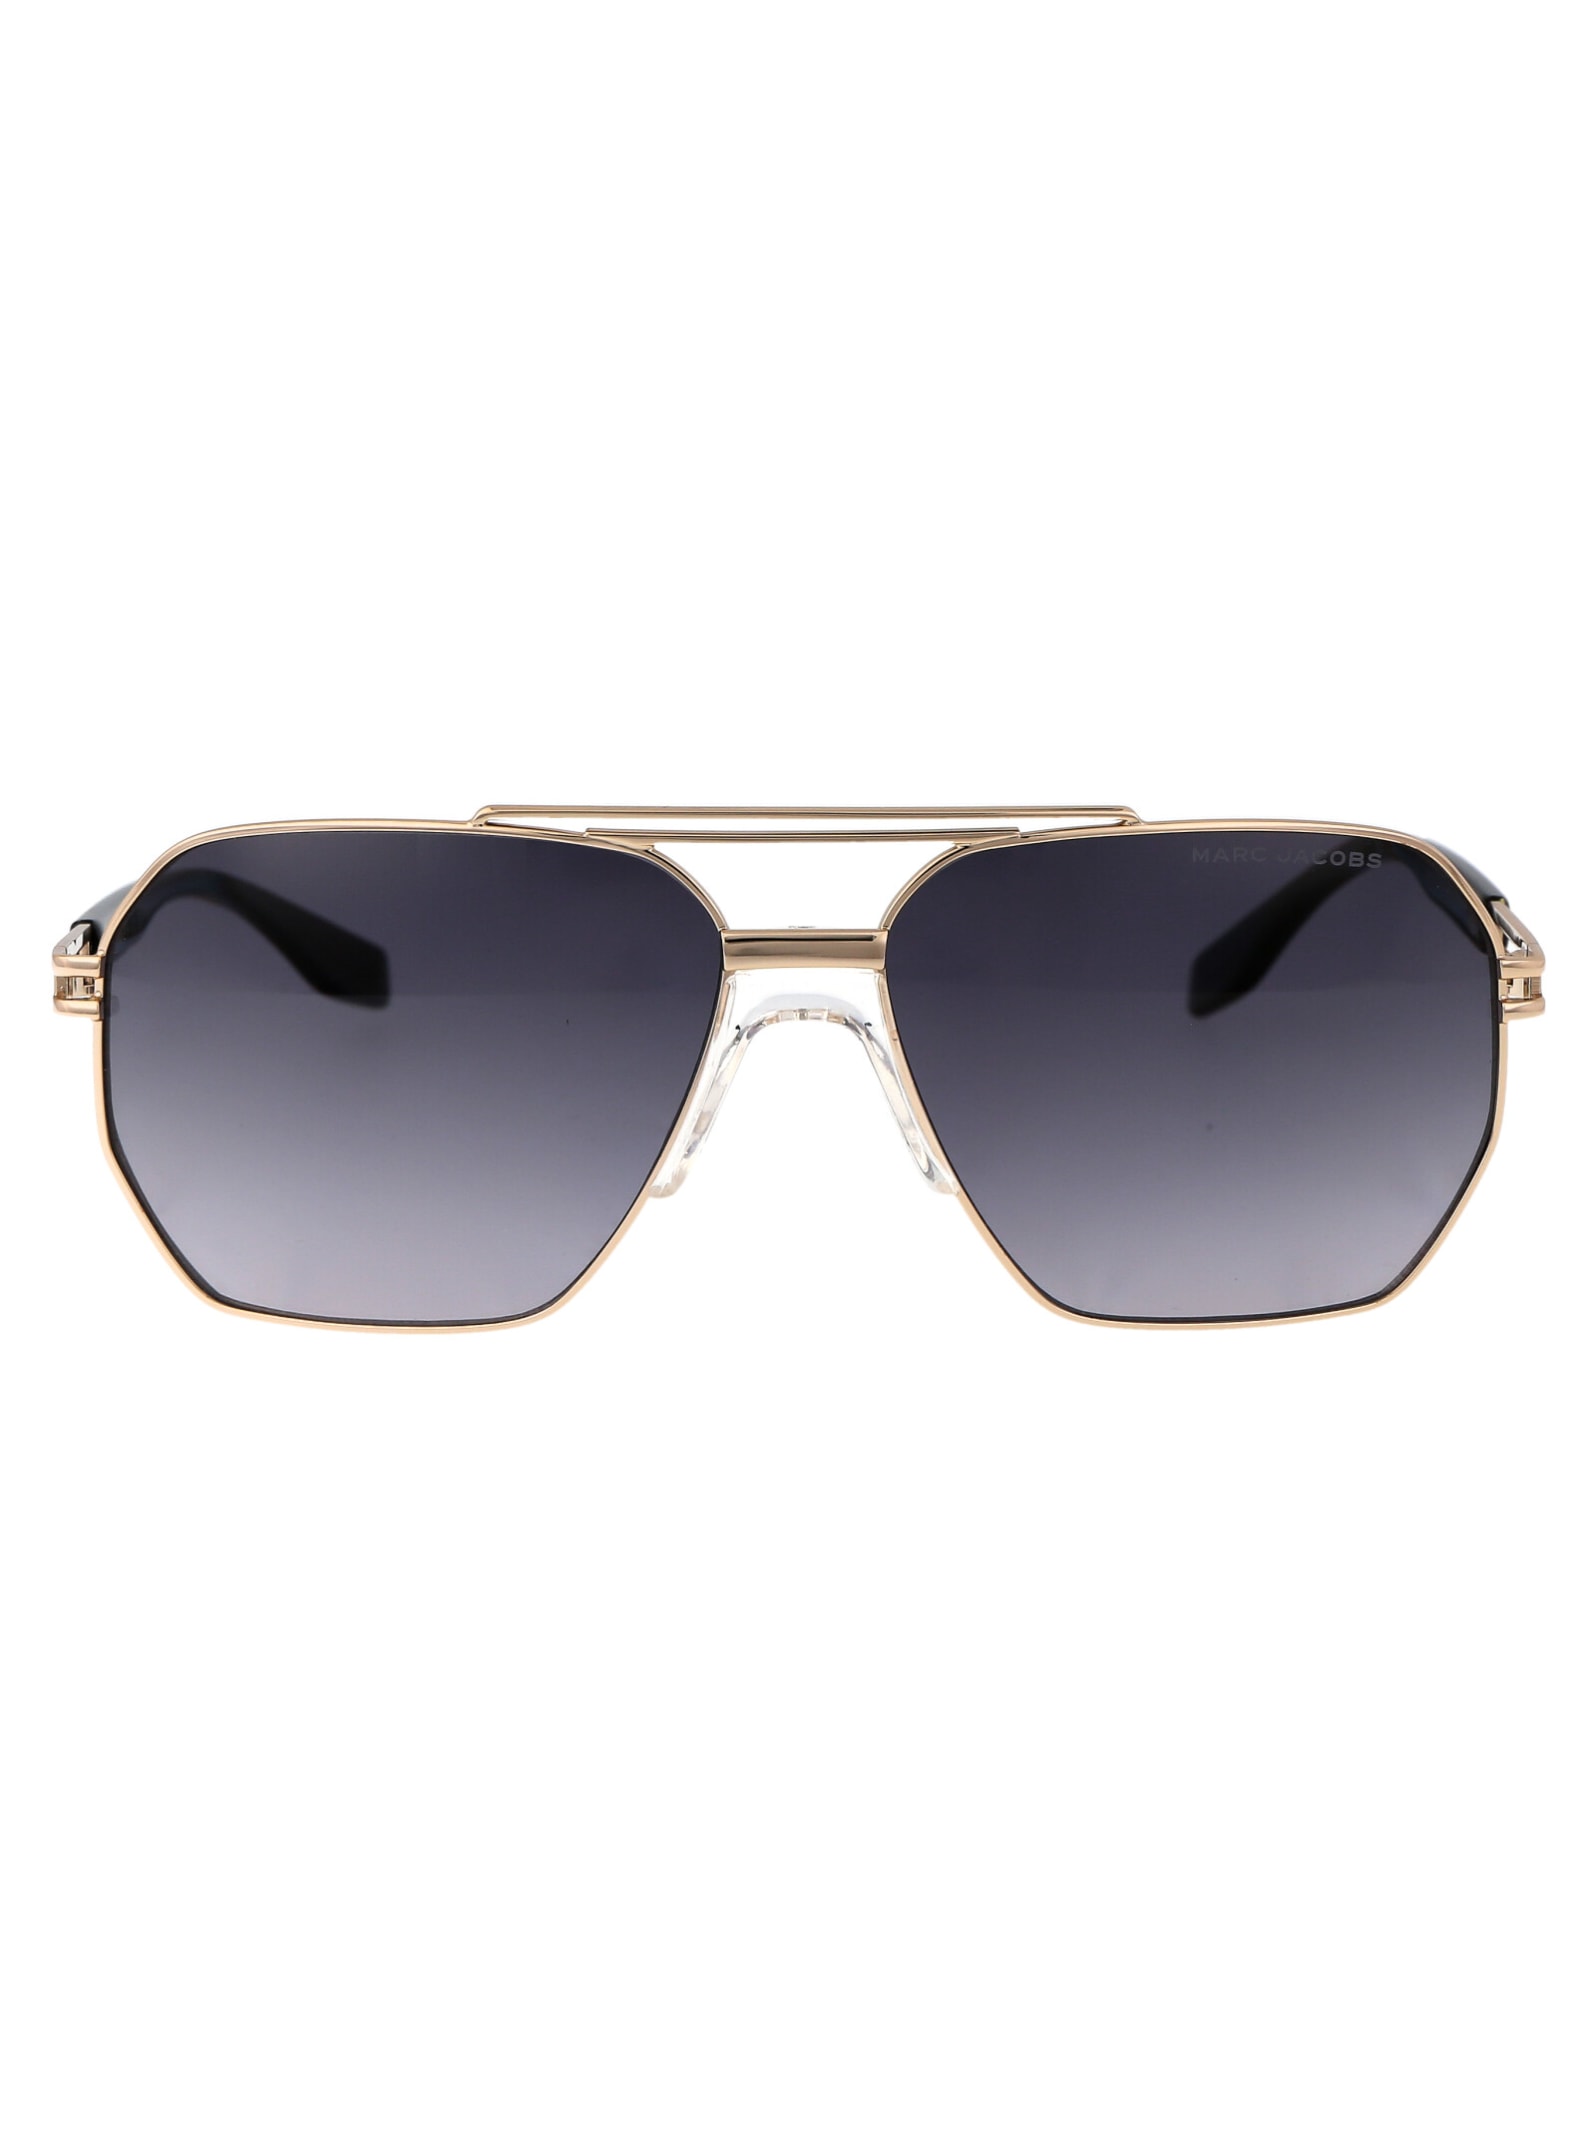 Marc 748/s Sunglasses